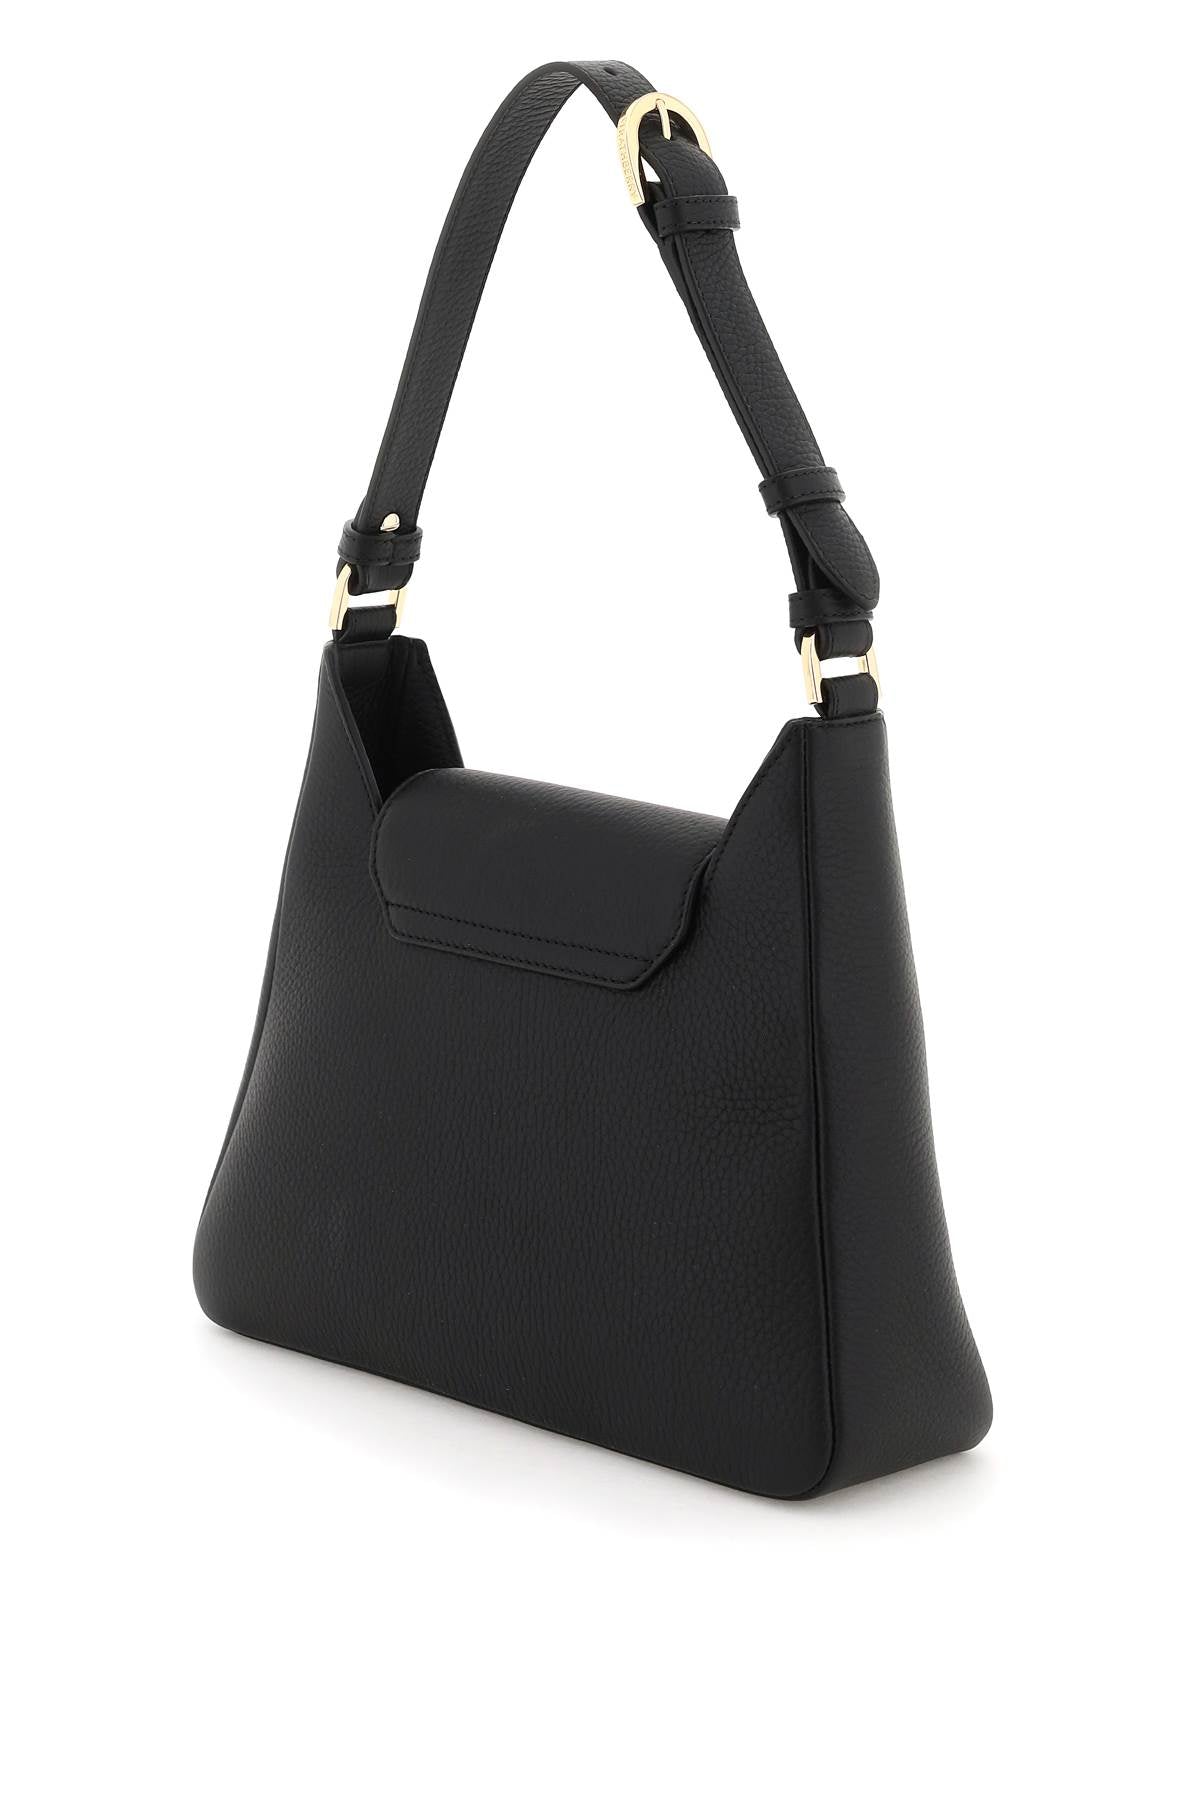 STRATHBERRY Sleek and Stylish Black Hobo Handbag for Women